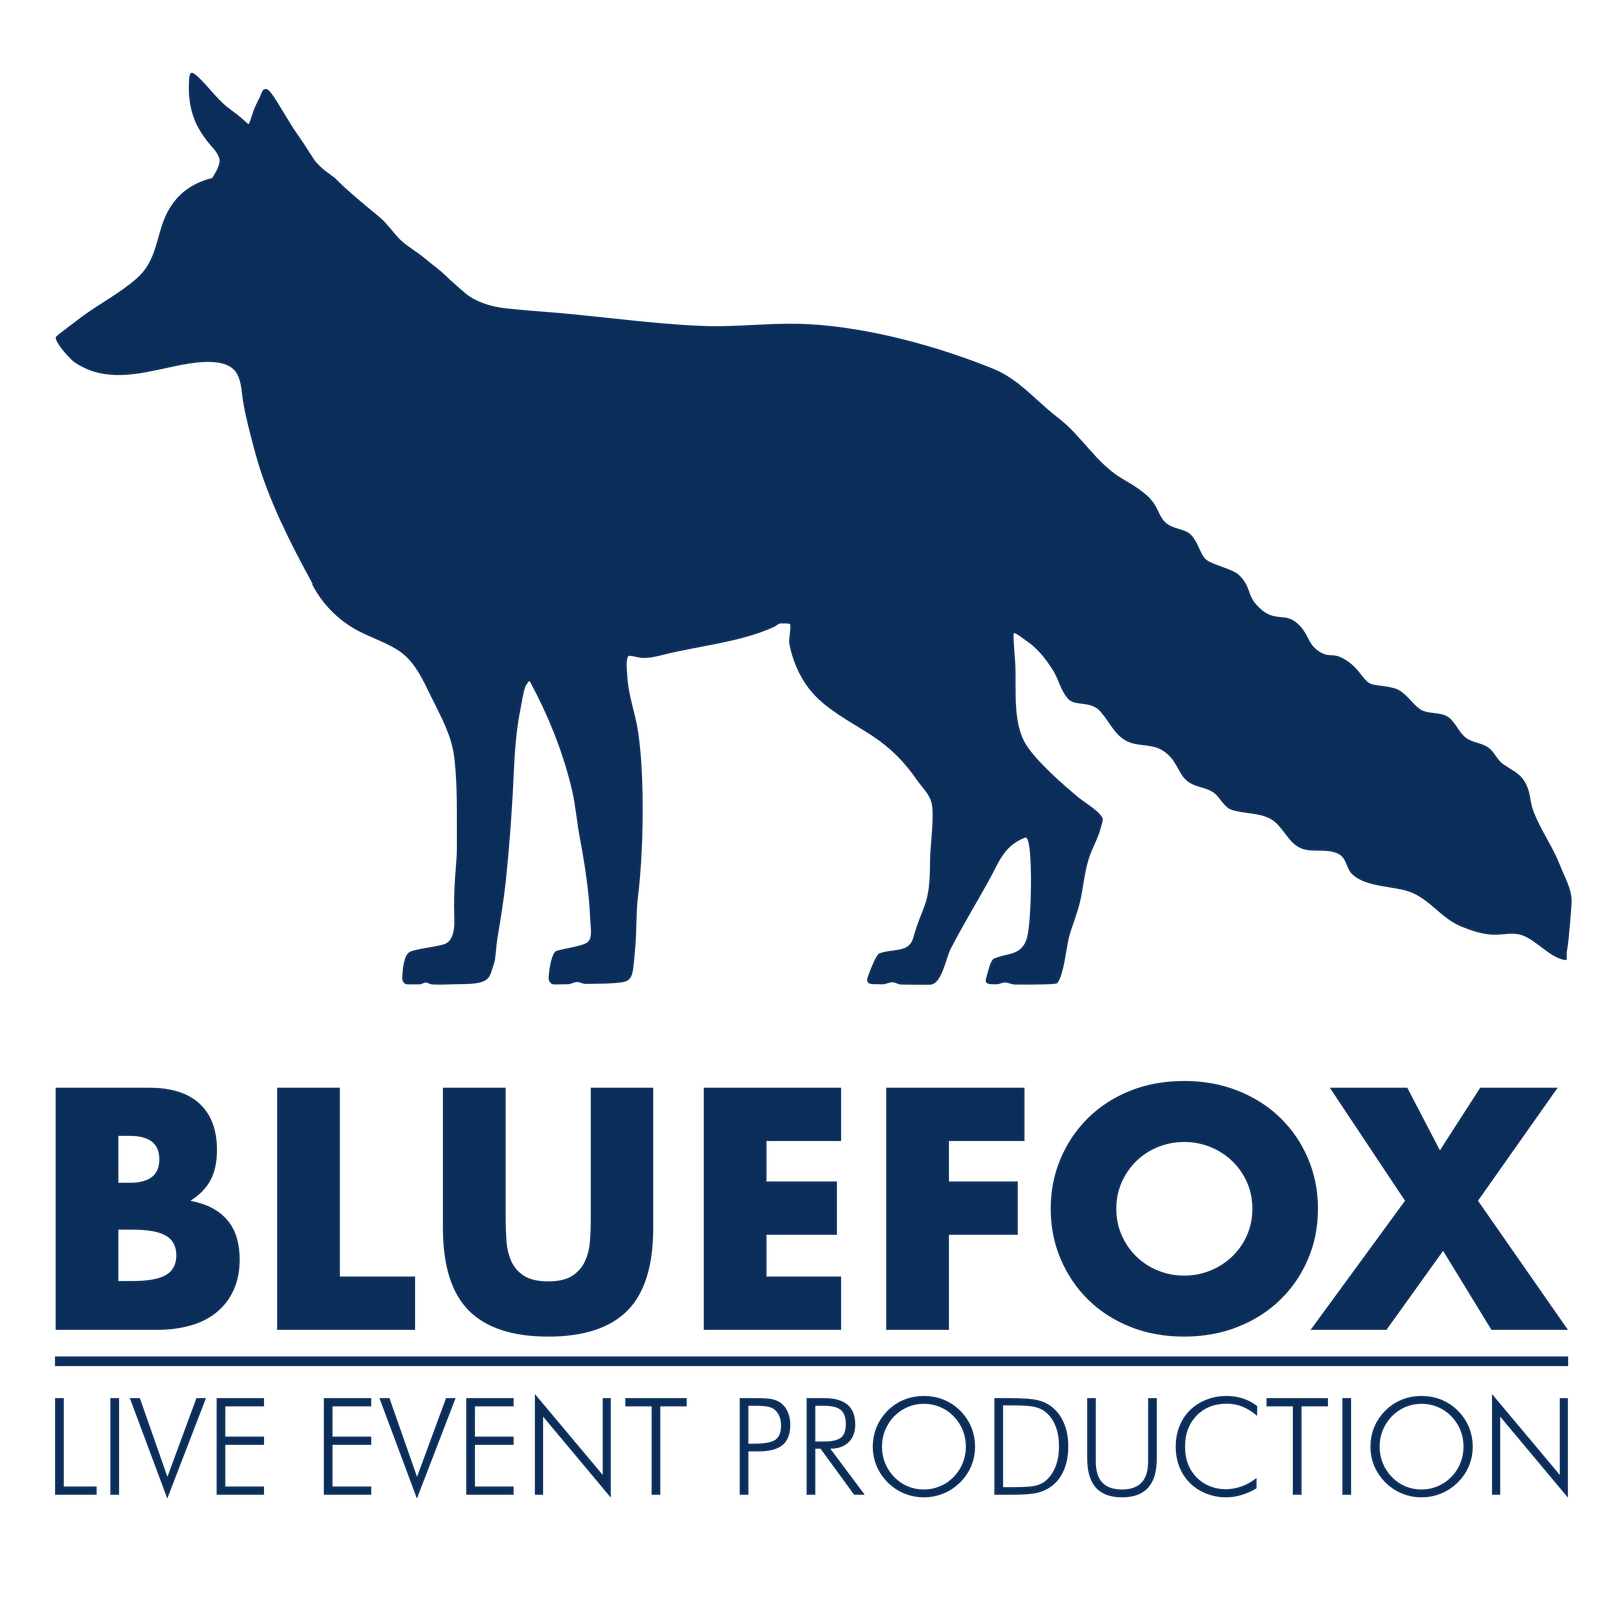 Bluefox Production, Live Event Audio Visual